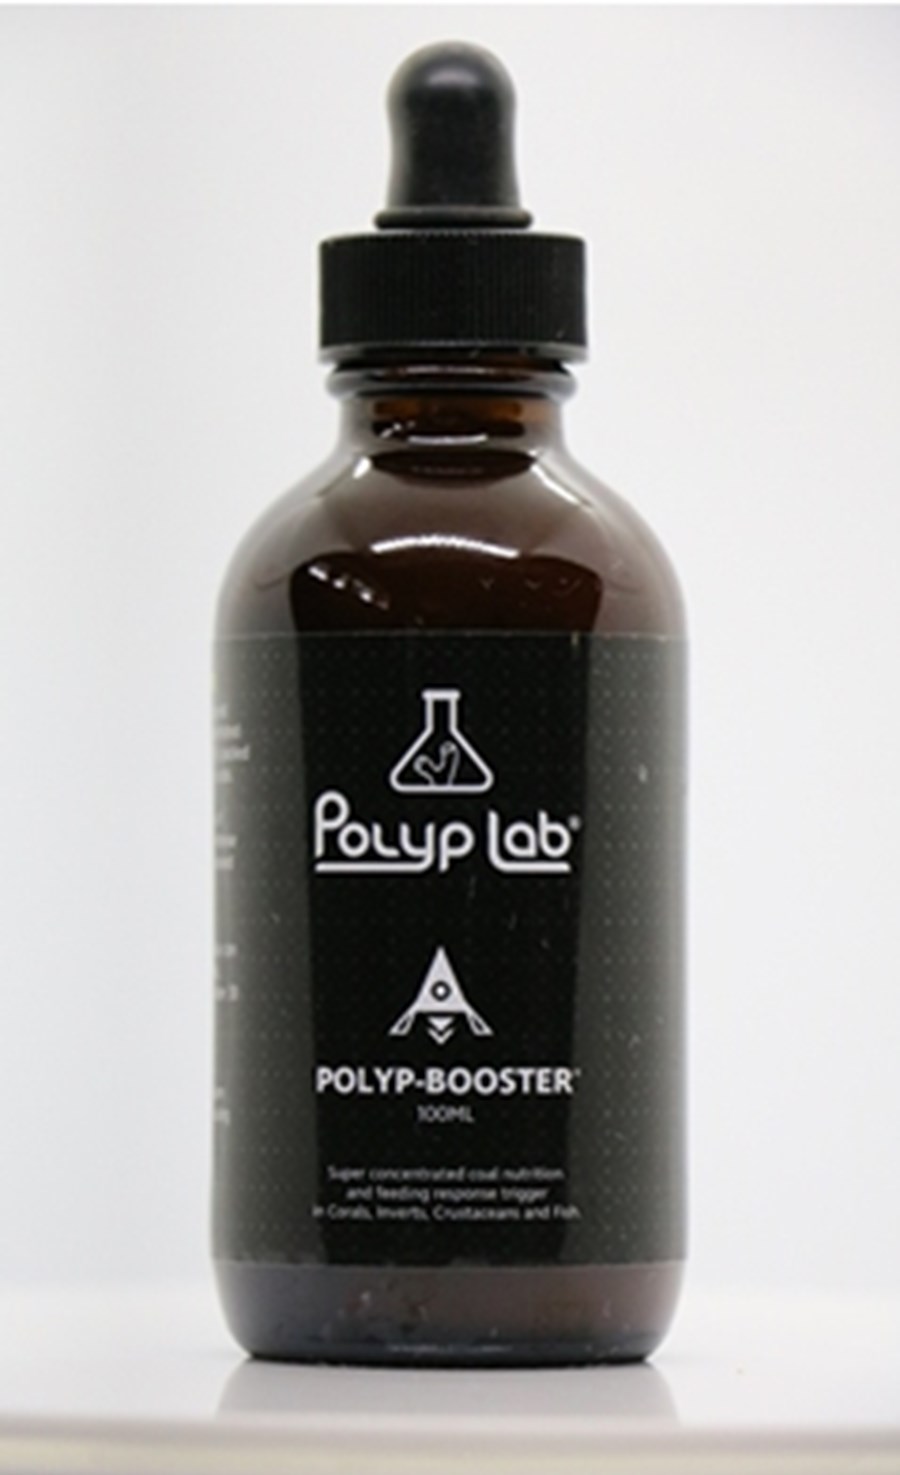 Polyplab Polyp Booster - 100ml